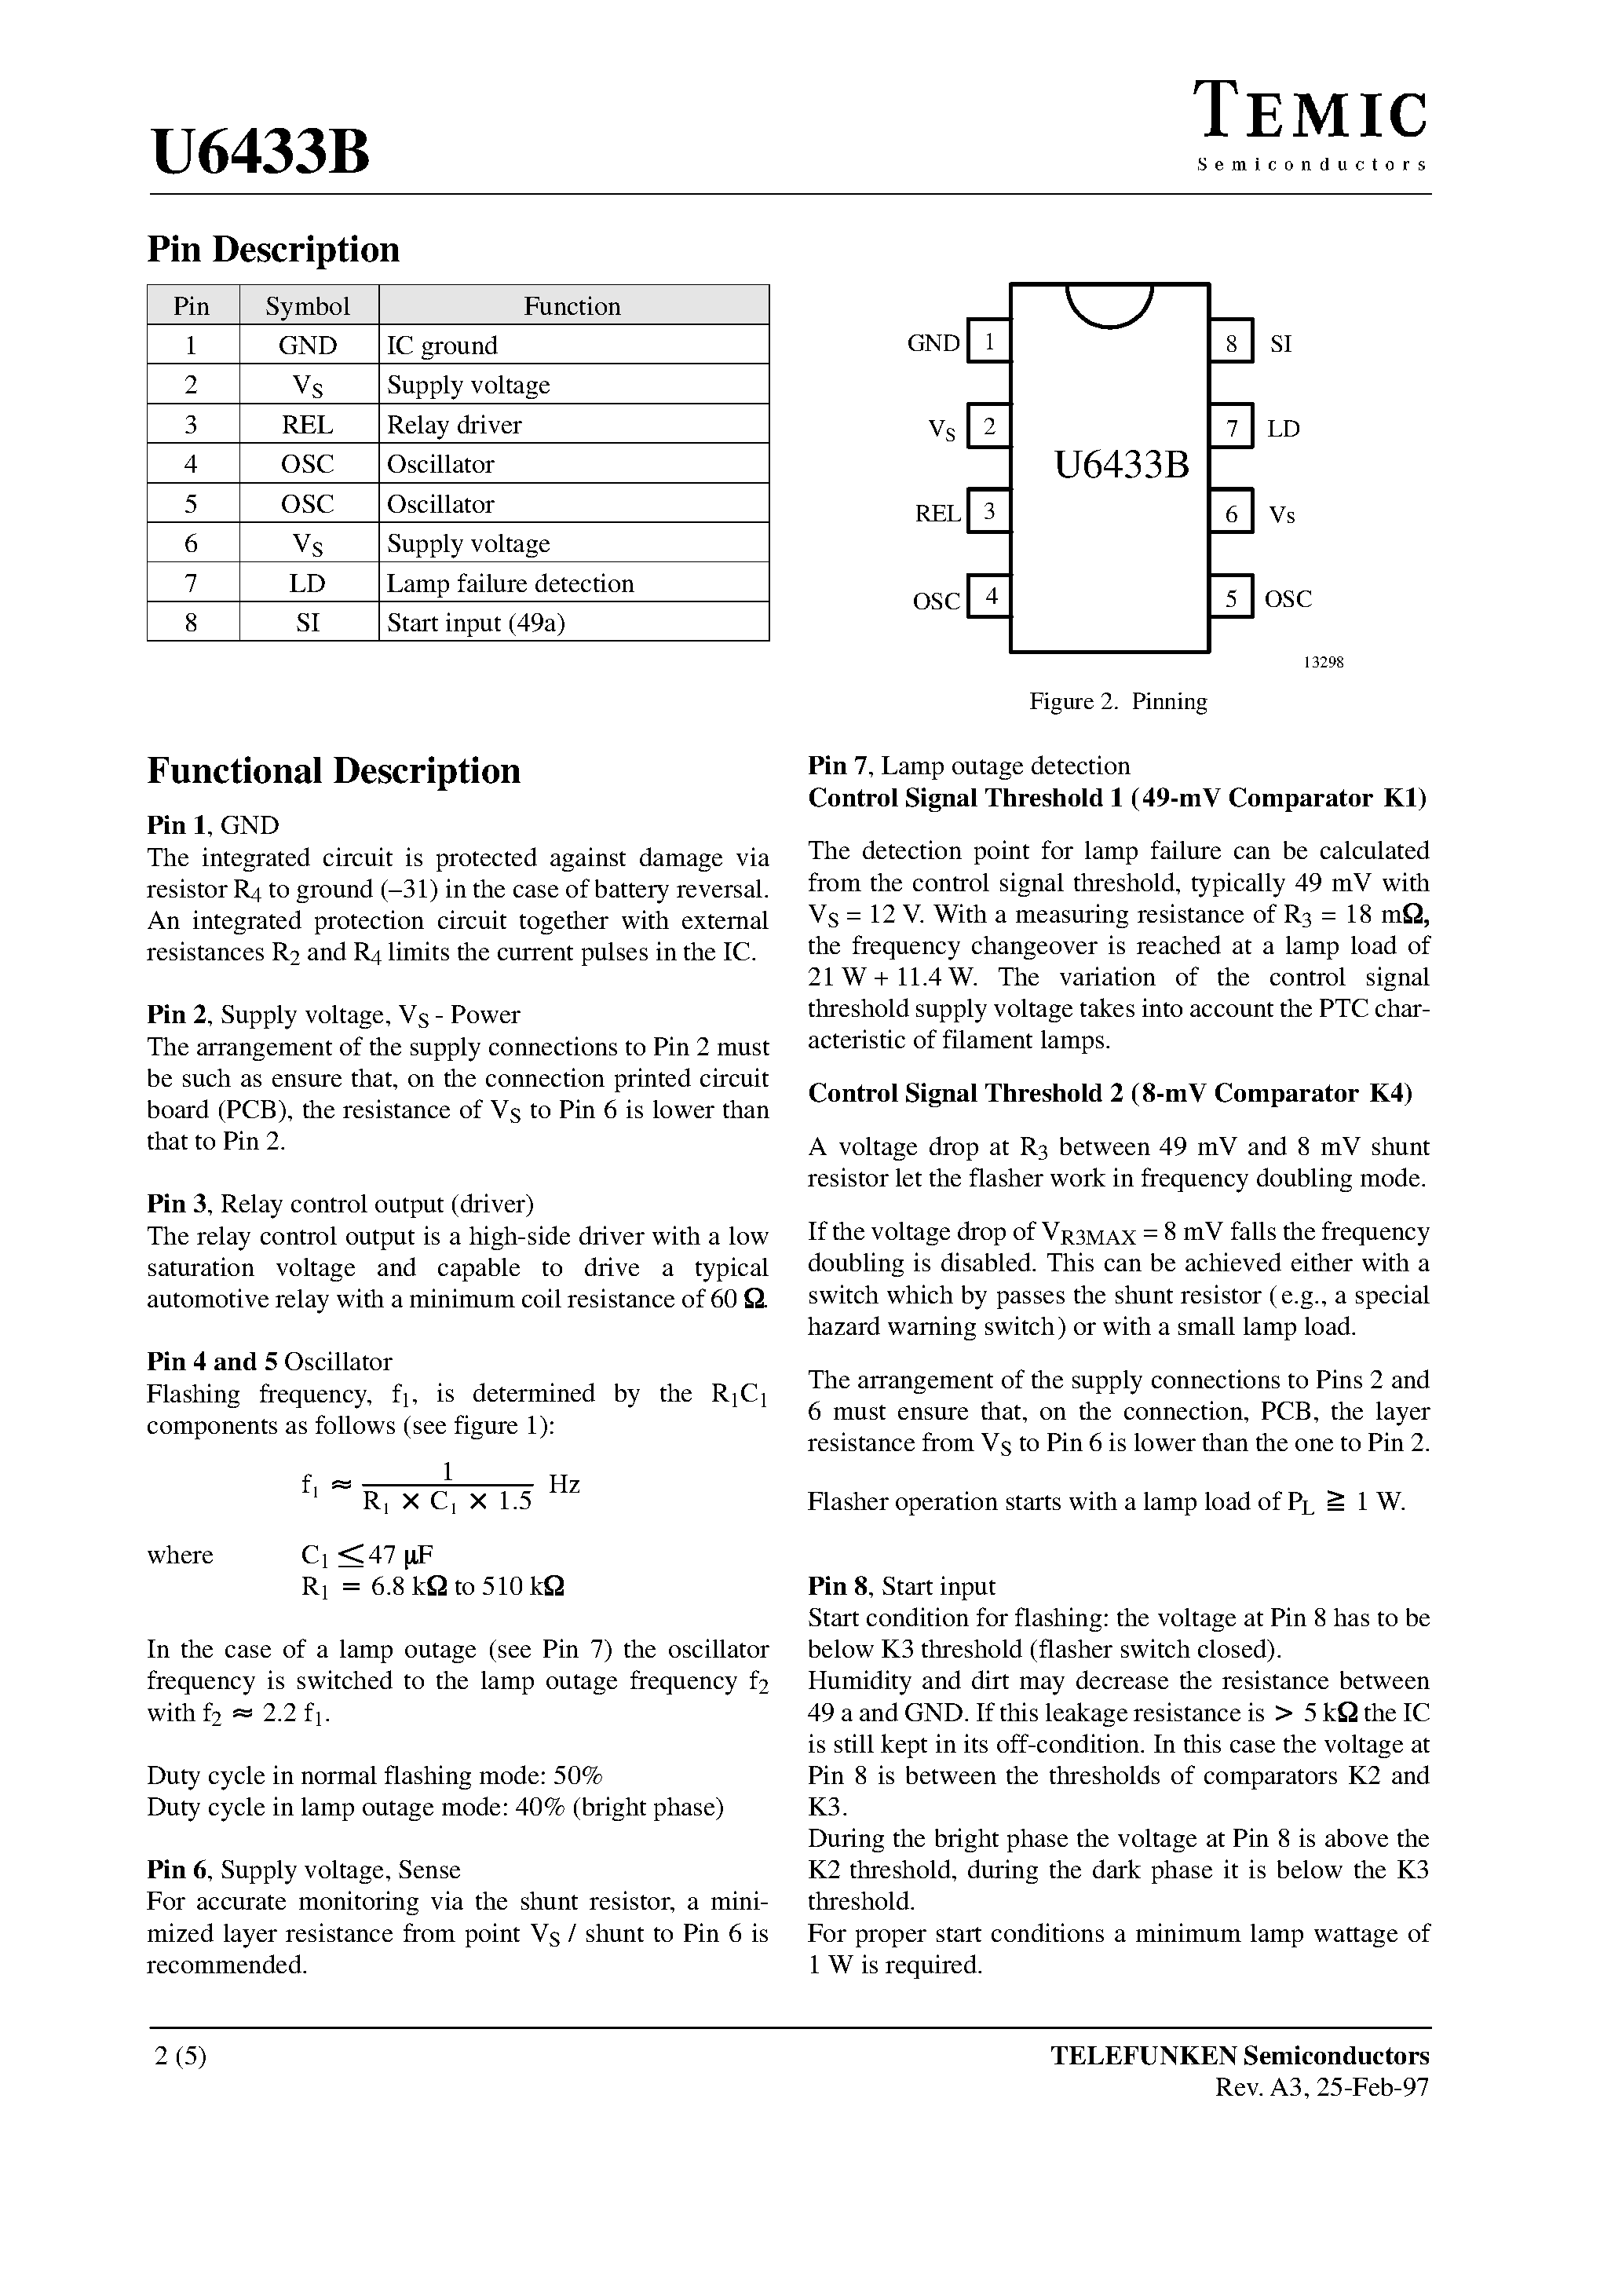 Datasheet U6433B-FP - Flasher/ 18-m Shunt/ Frequency Doubling Disabling page 2